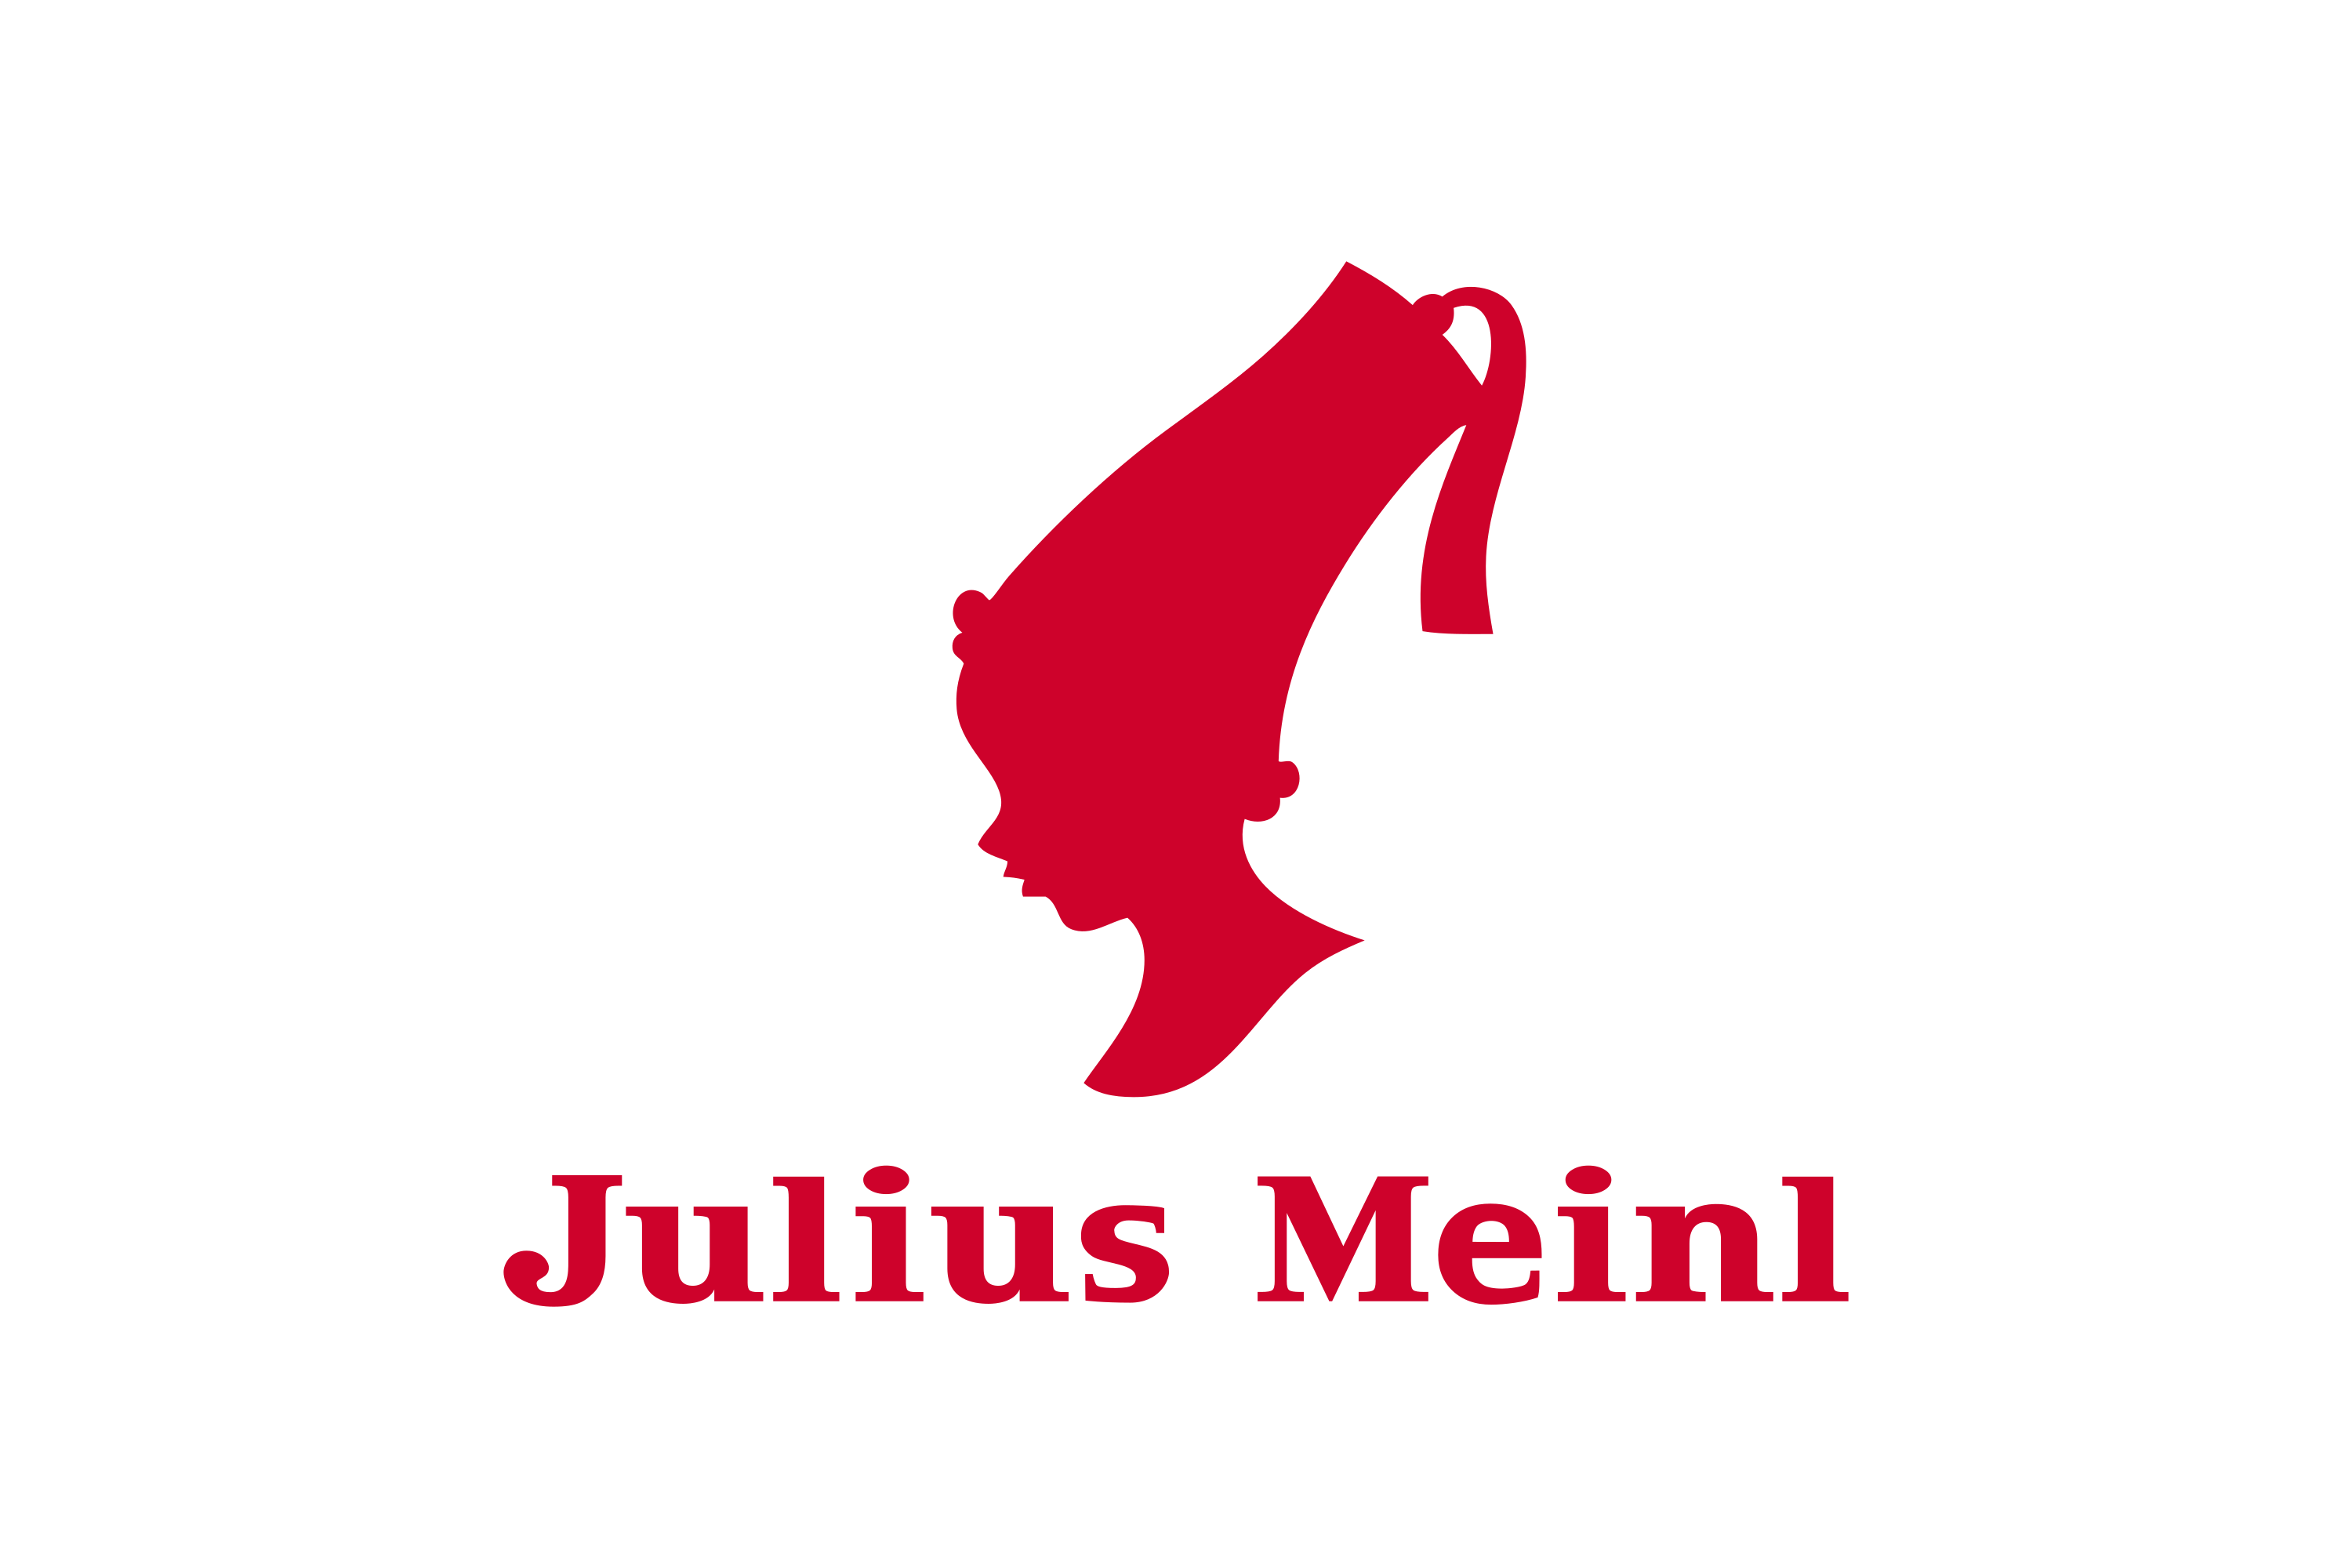 Download Julius Meinl Logo in SVG Vector or PNG File Format - Logo.wine